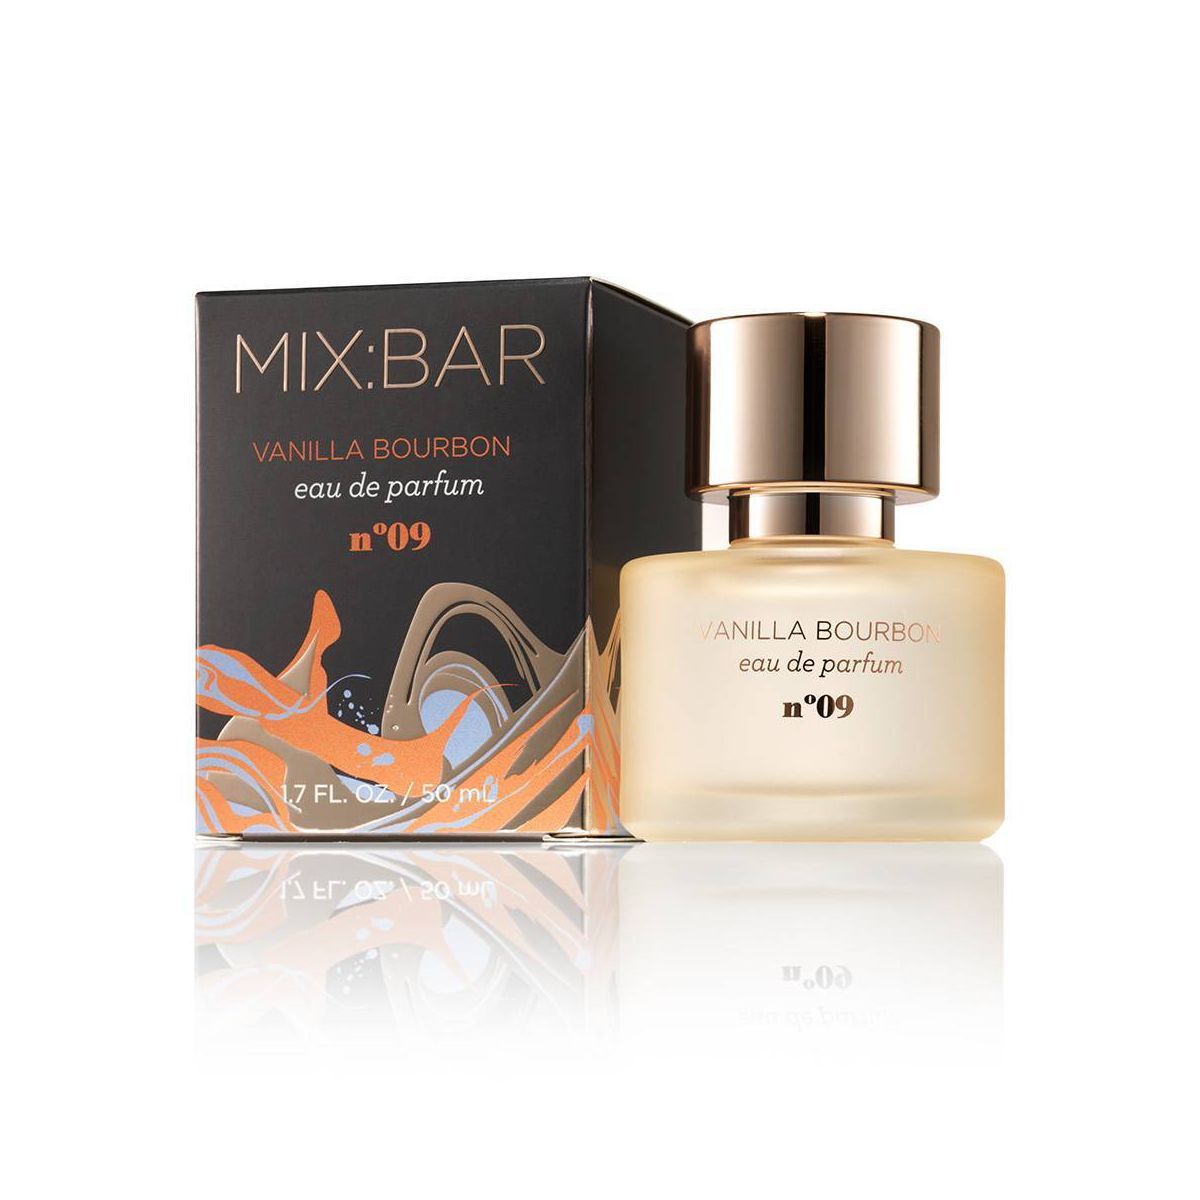 MIX:BAR EDP Perfume -  Vanilla Bourbon - 1.7 fl oz | Target